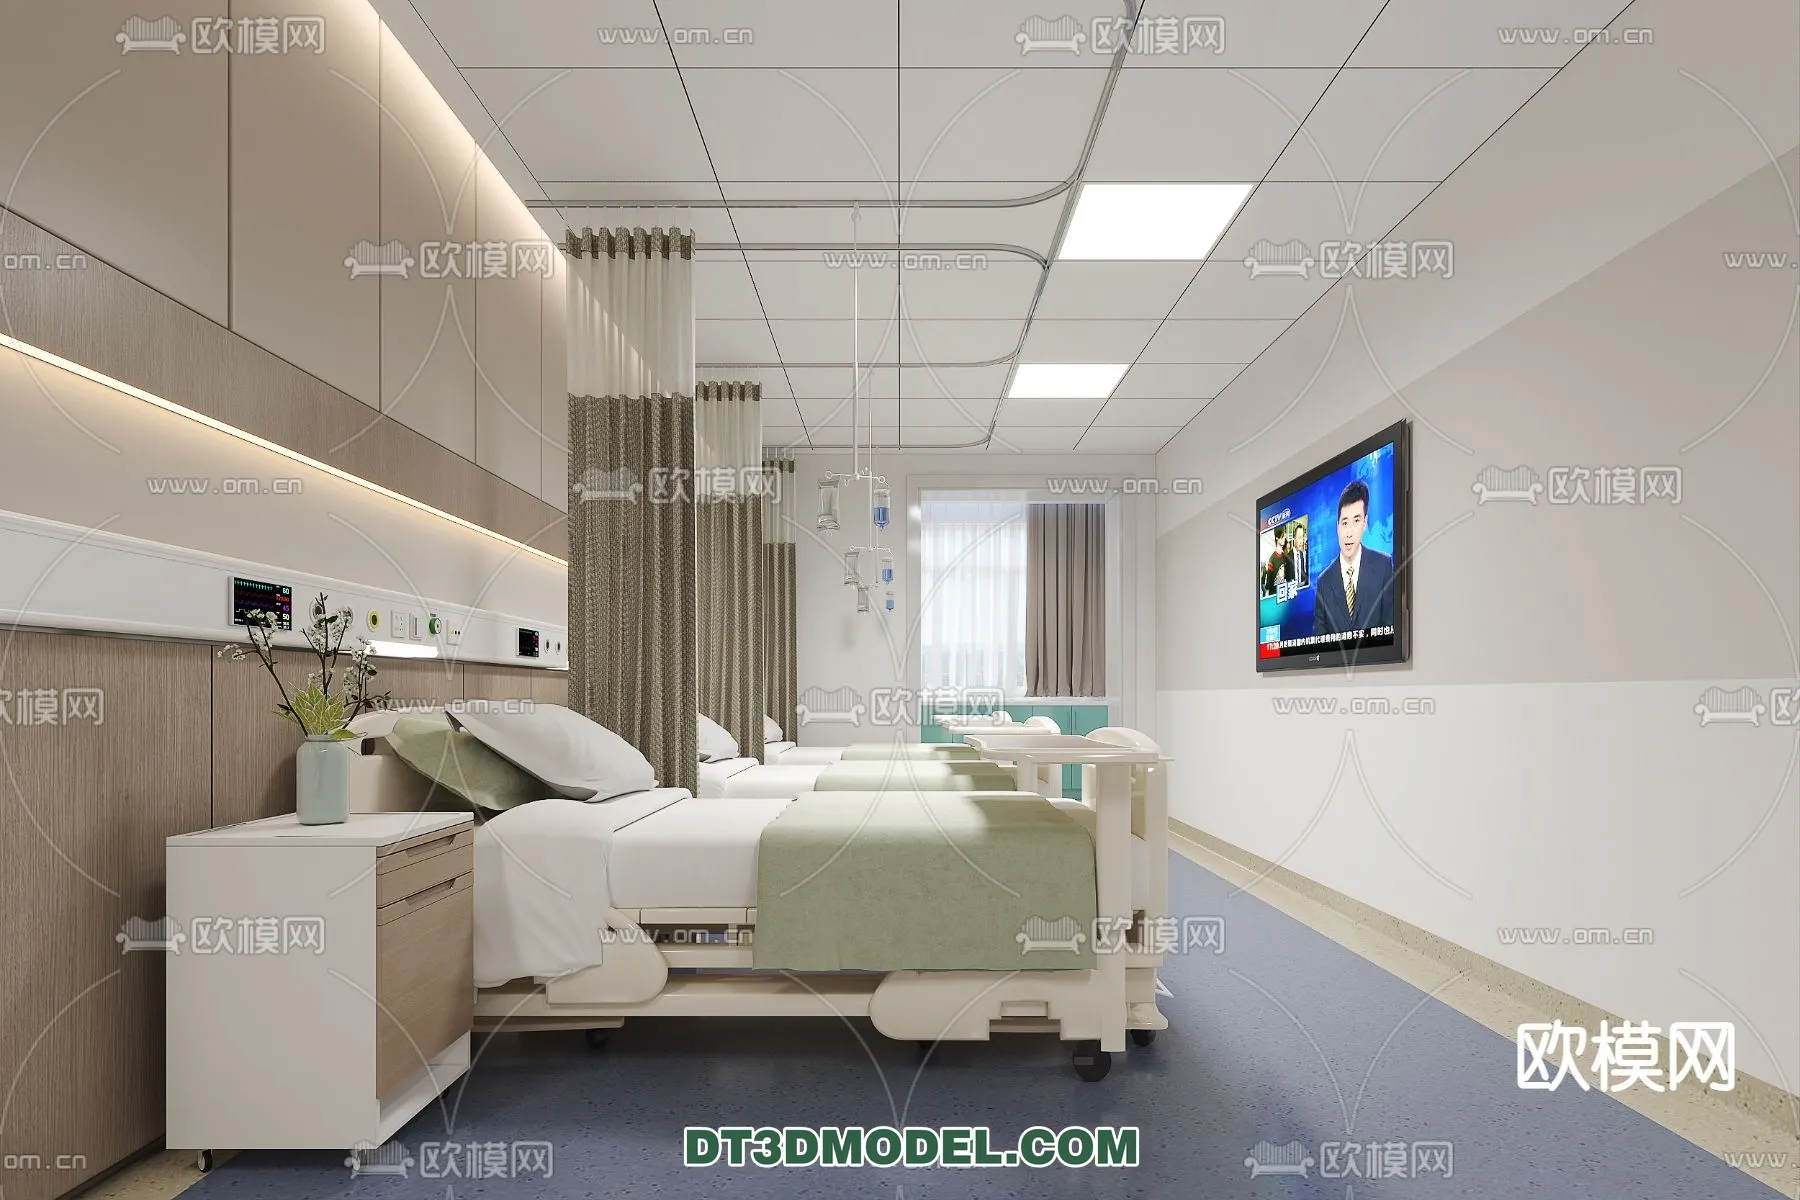 HOSPITAL 3D SCENES – MODERN – 0145